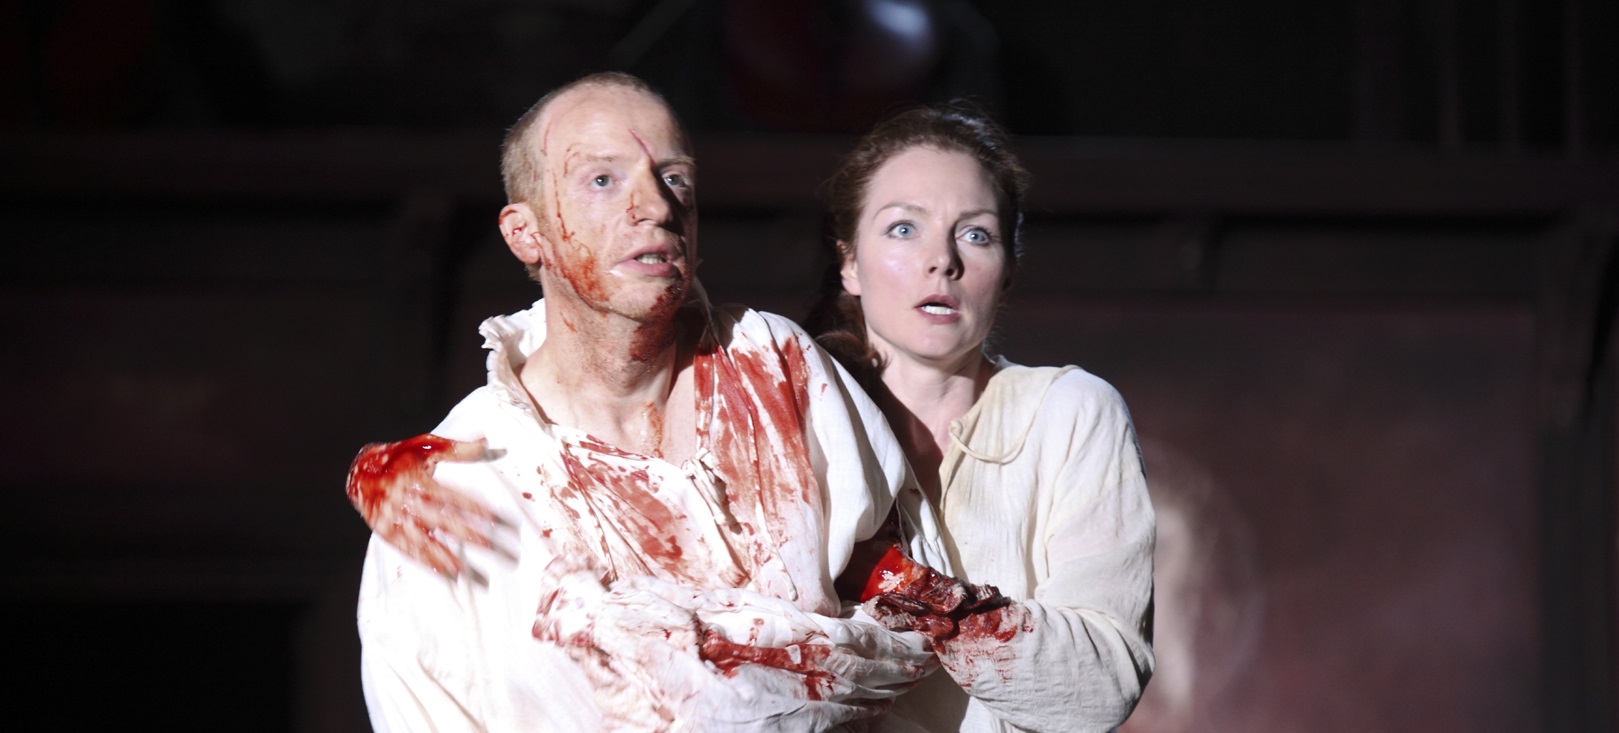 Macbeth and Lady Macbeth after Duncan